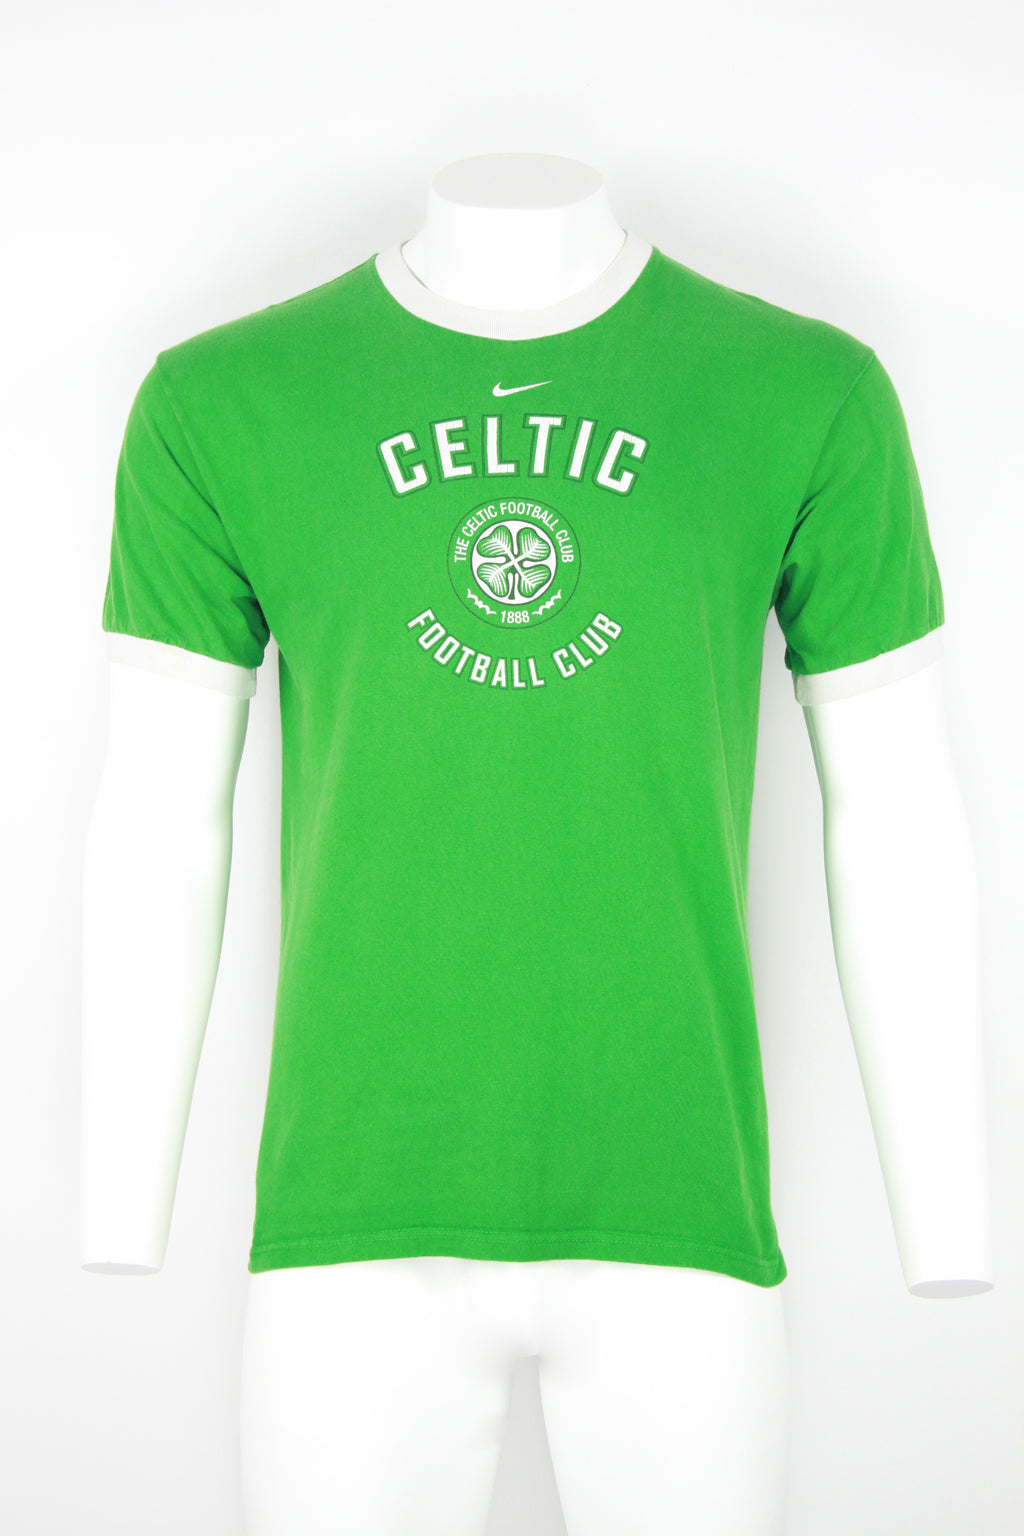 Retro Celtic Tops, Celtic FC Jerseys